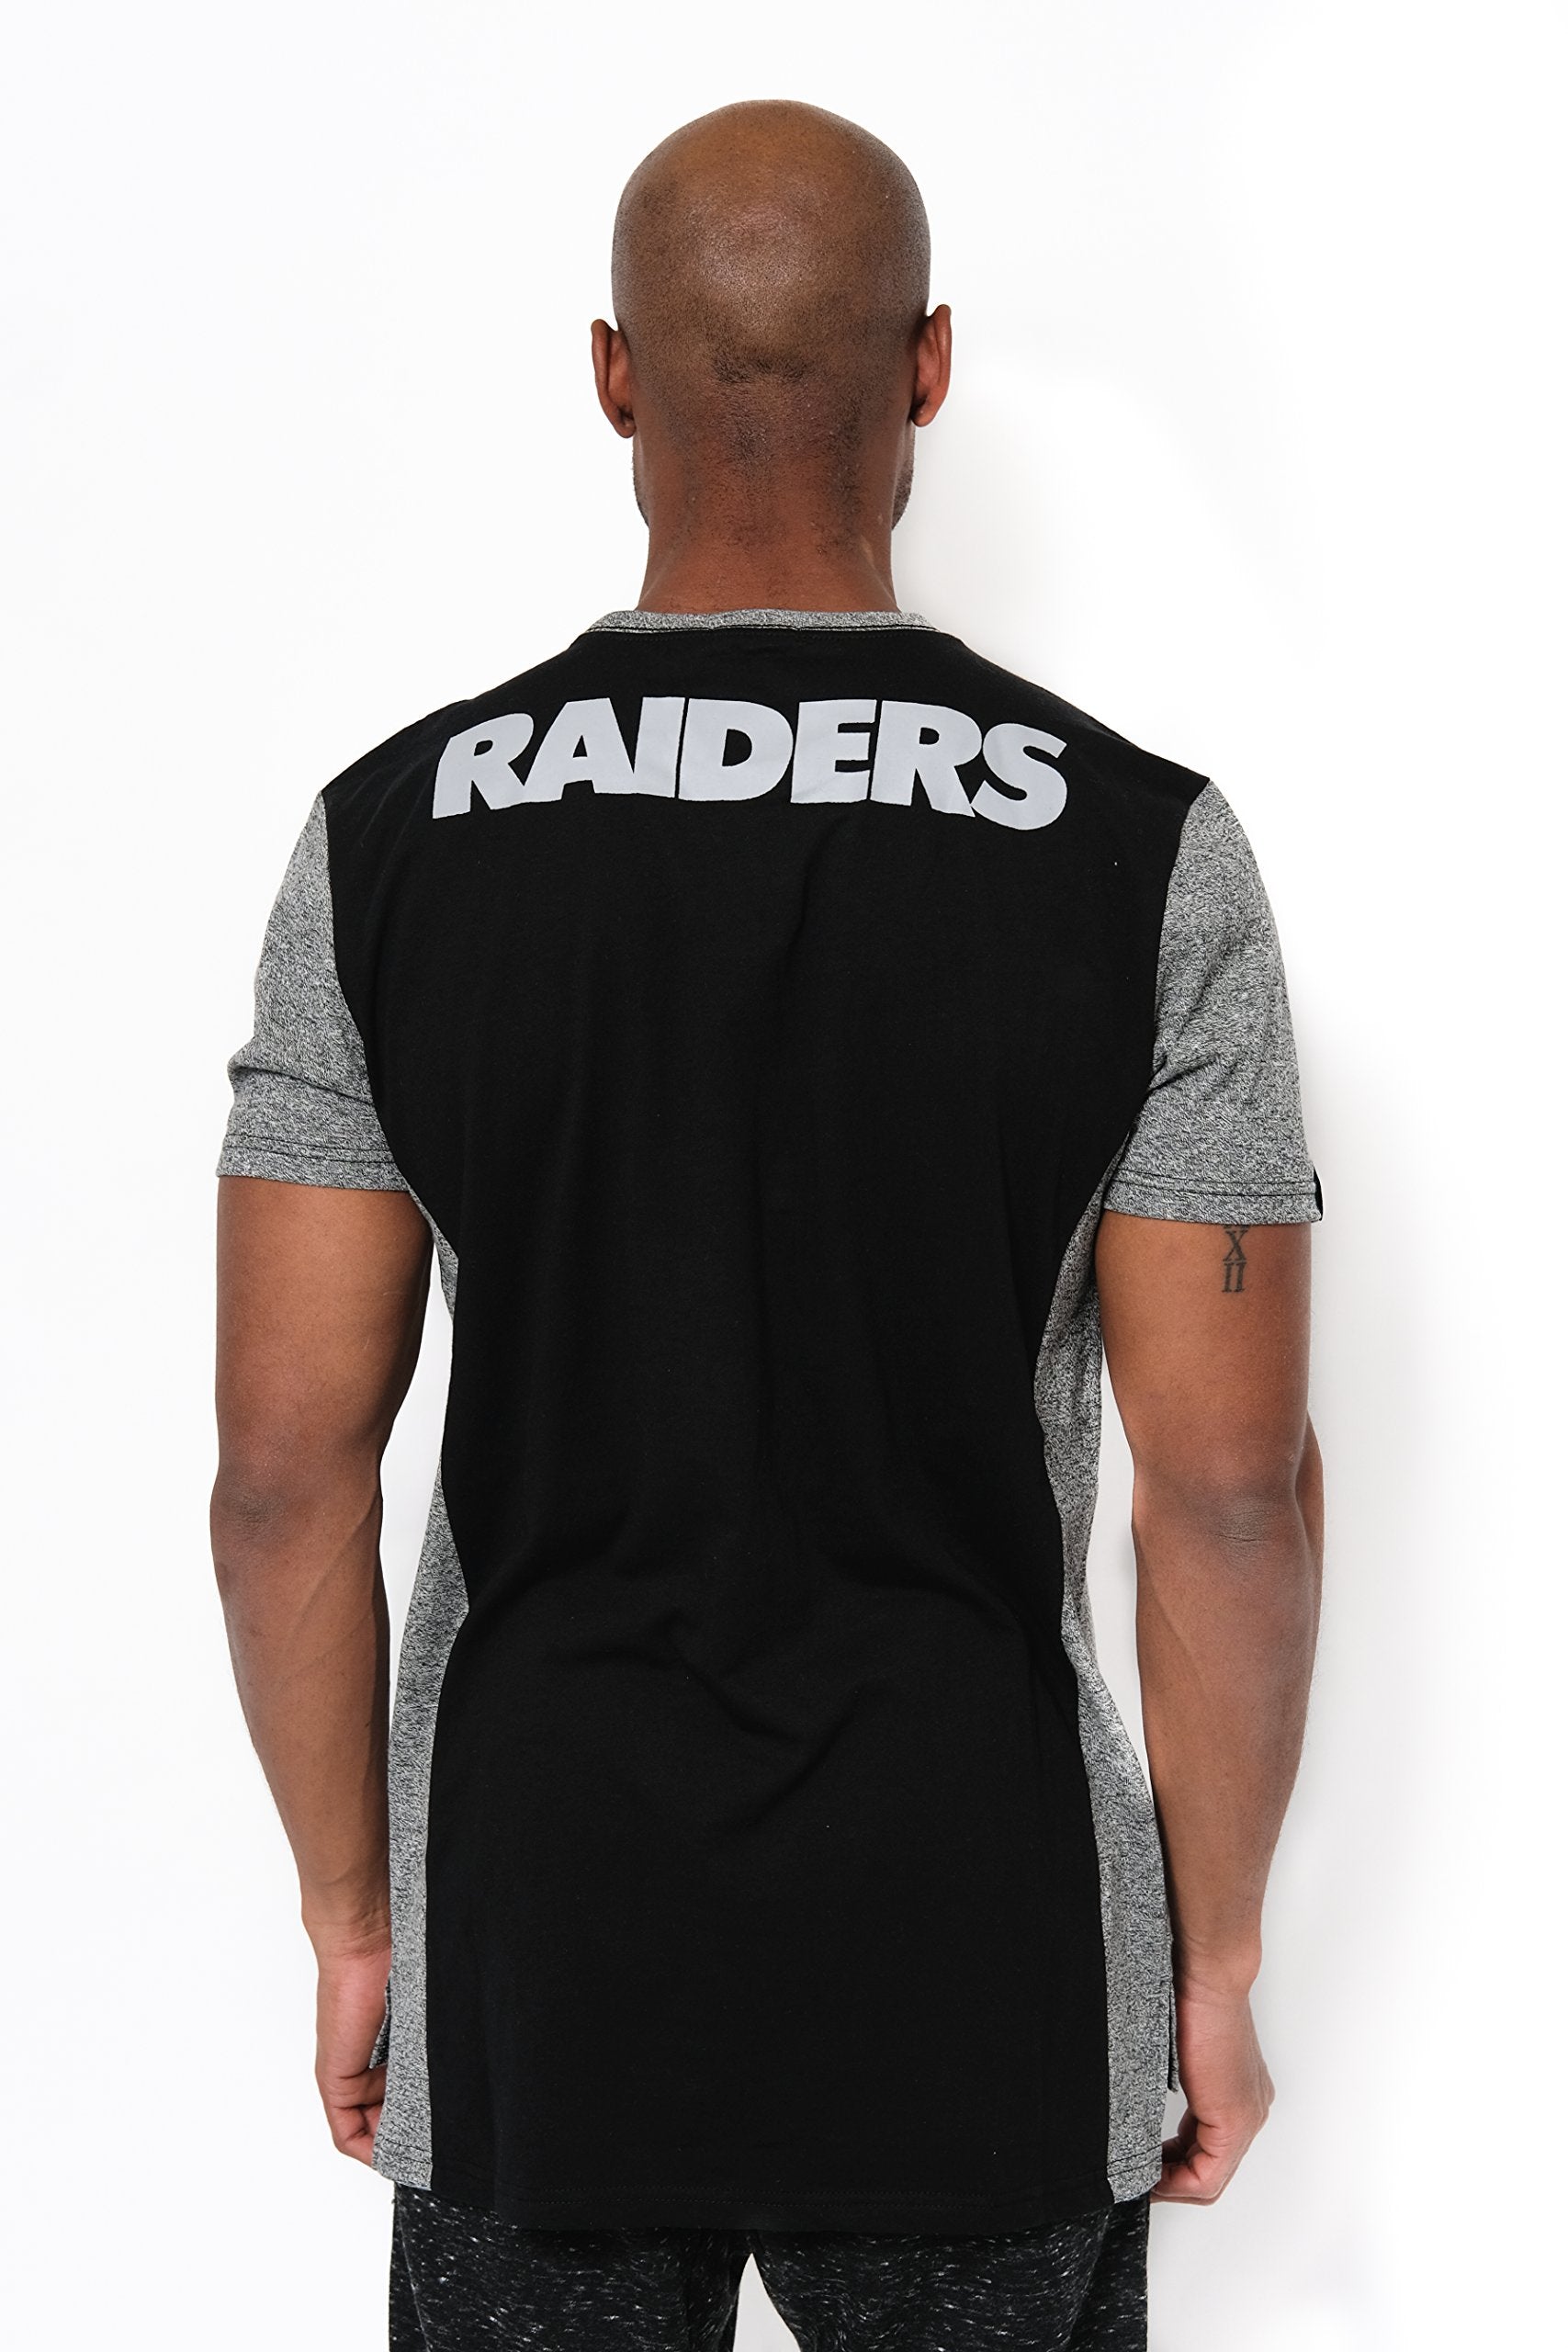 Ultra Game NFL Las Vegas Raiders Mens T-Shirt Raglan Block Short Sleeve Tee Shirt|Las Vegas Raiders